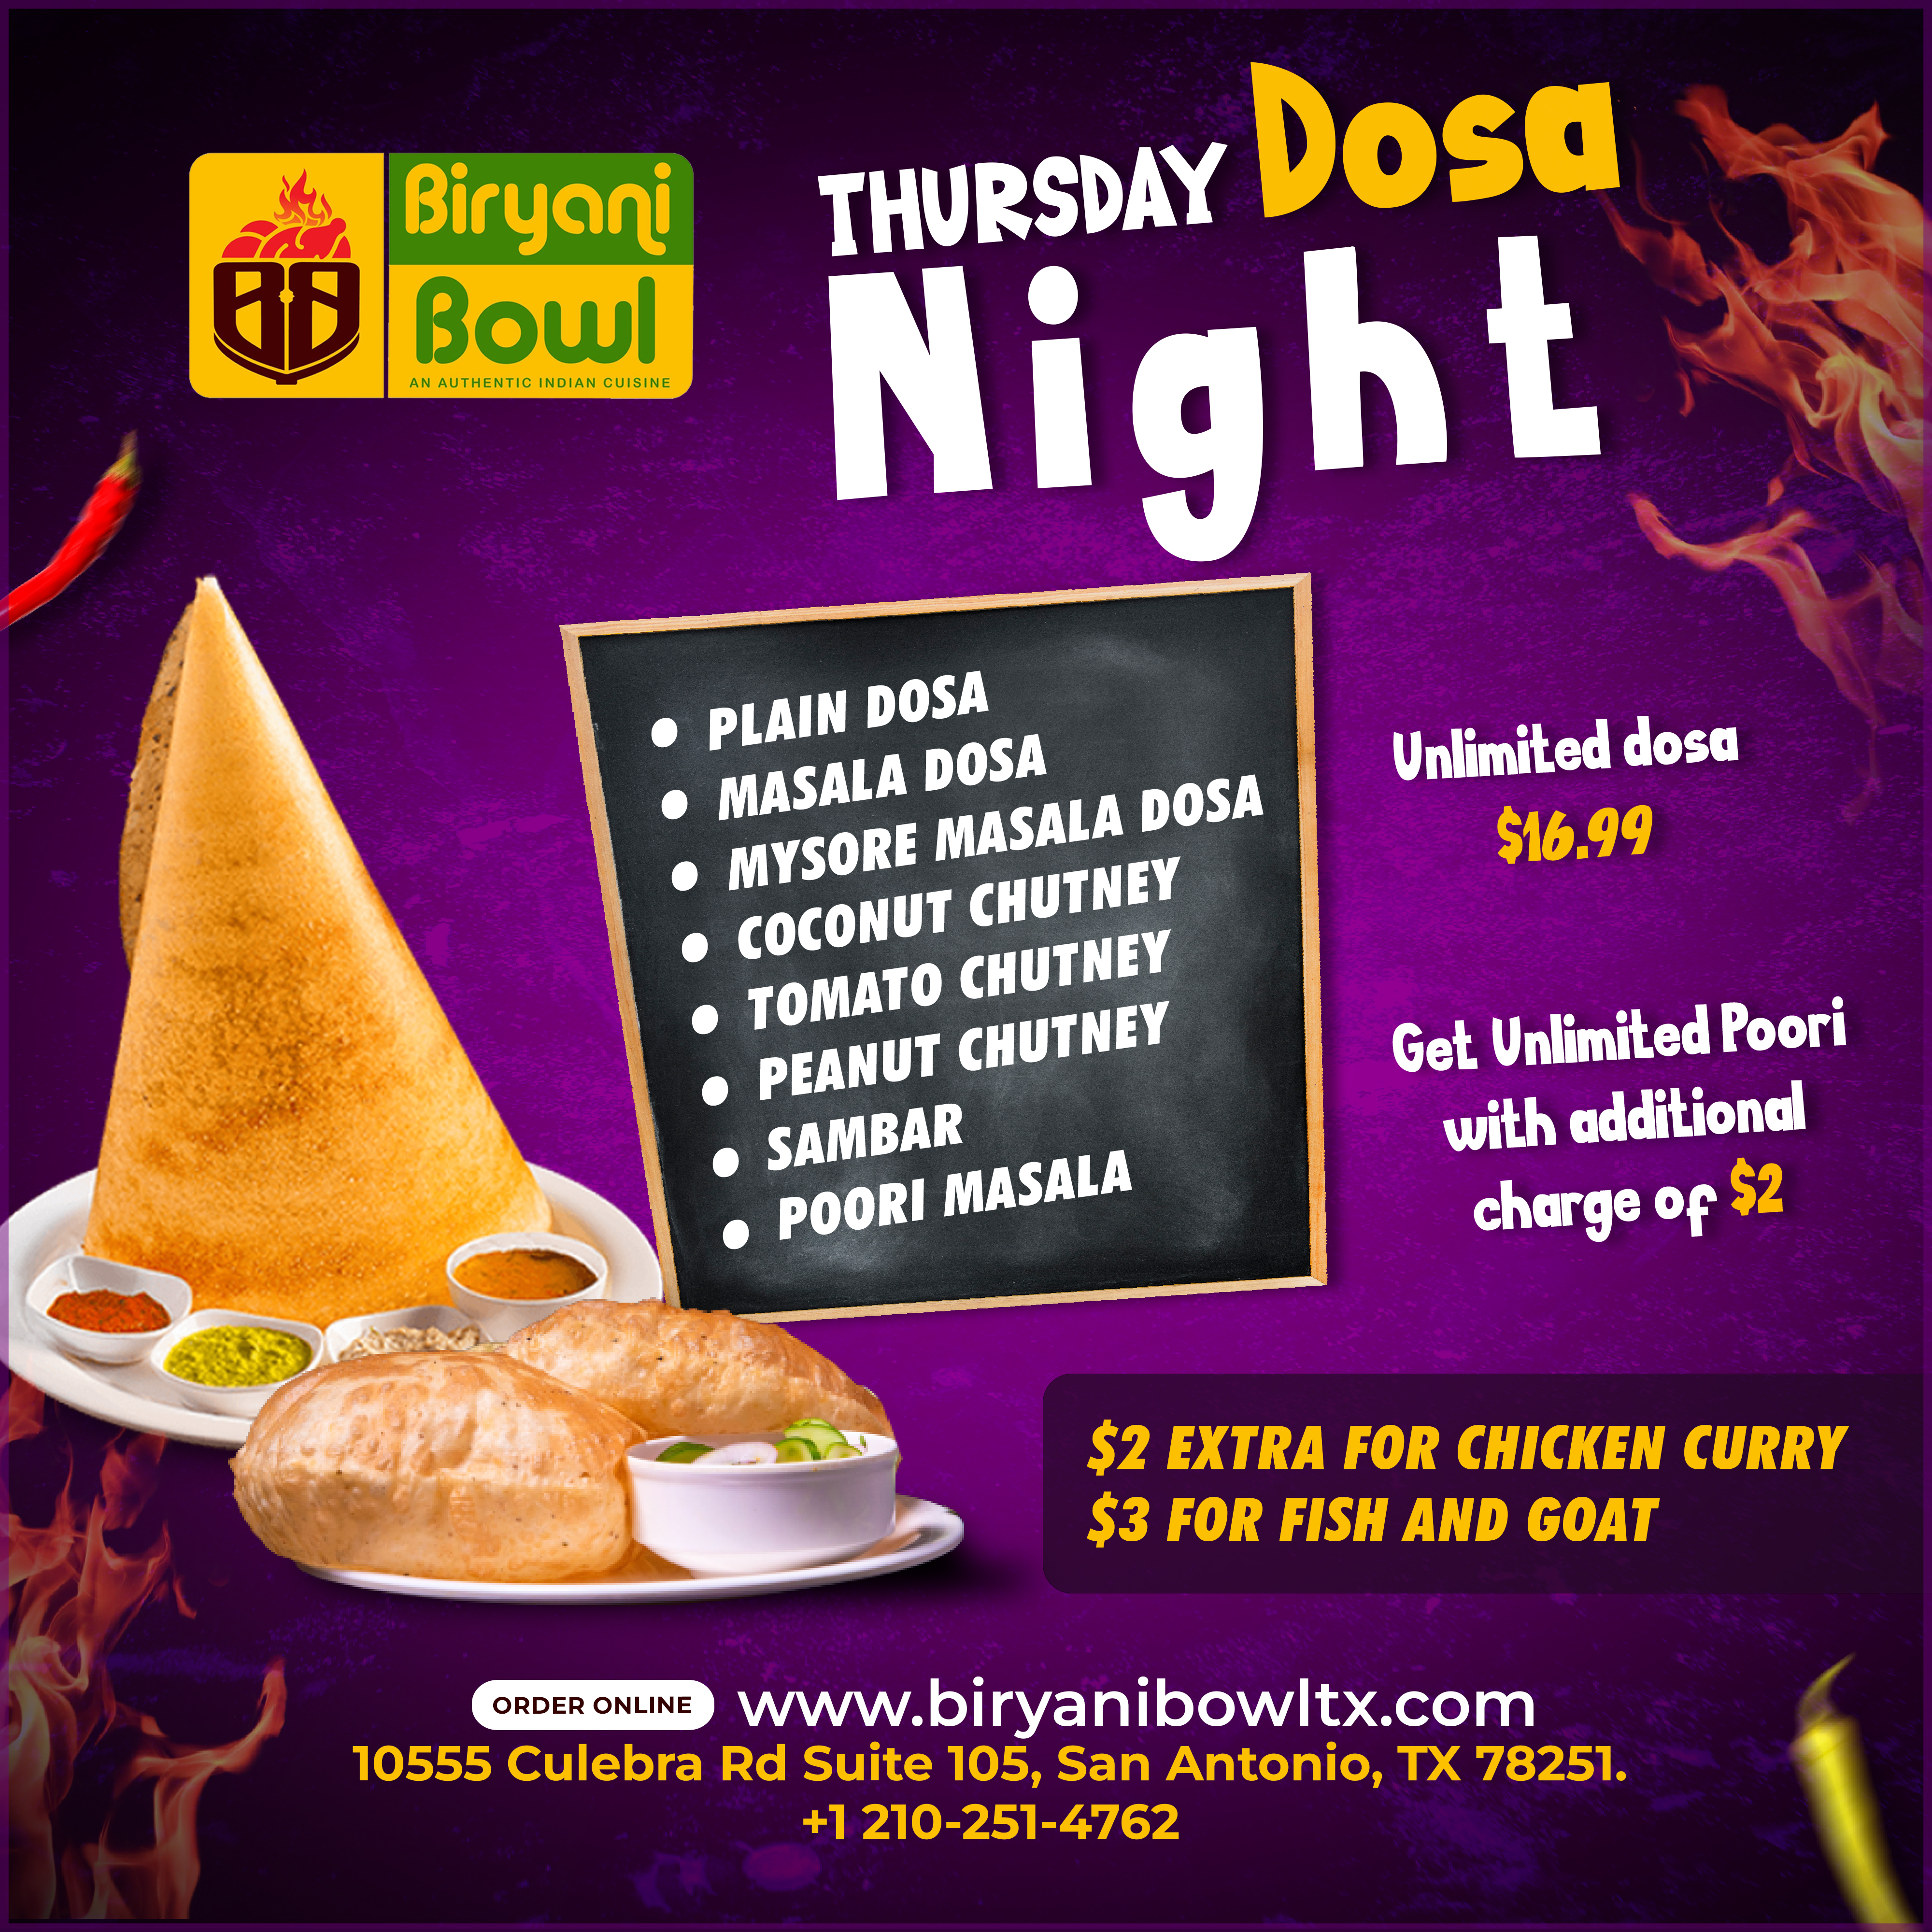 Thursday Dosa Night